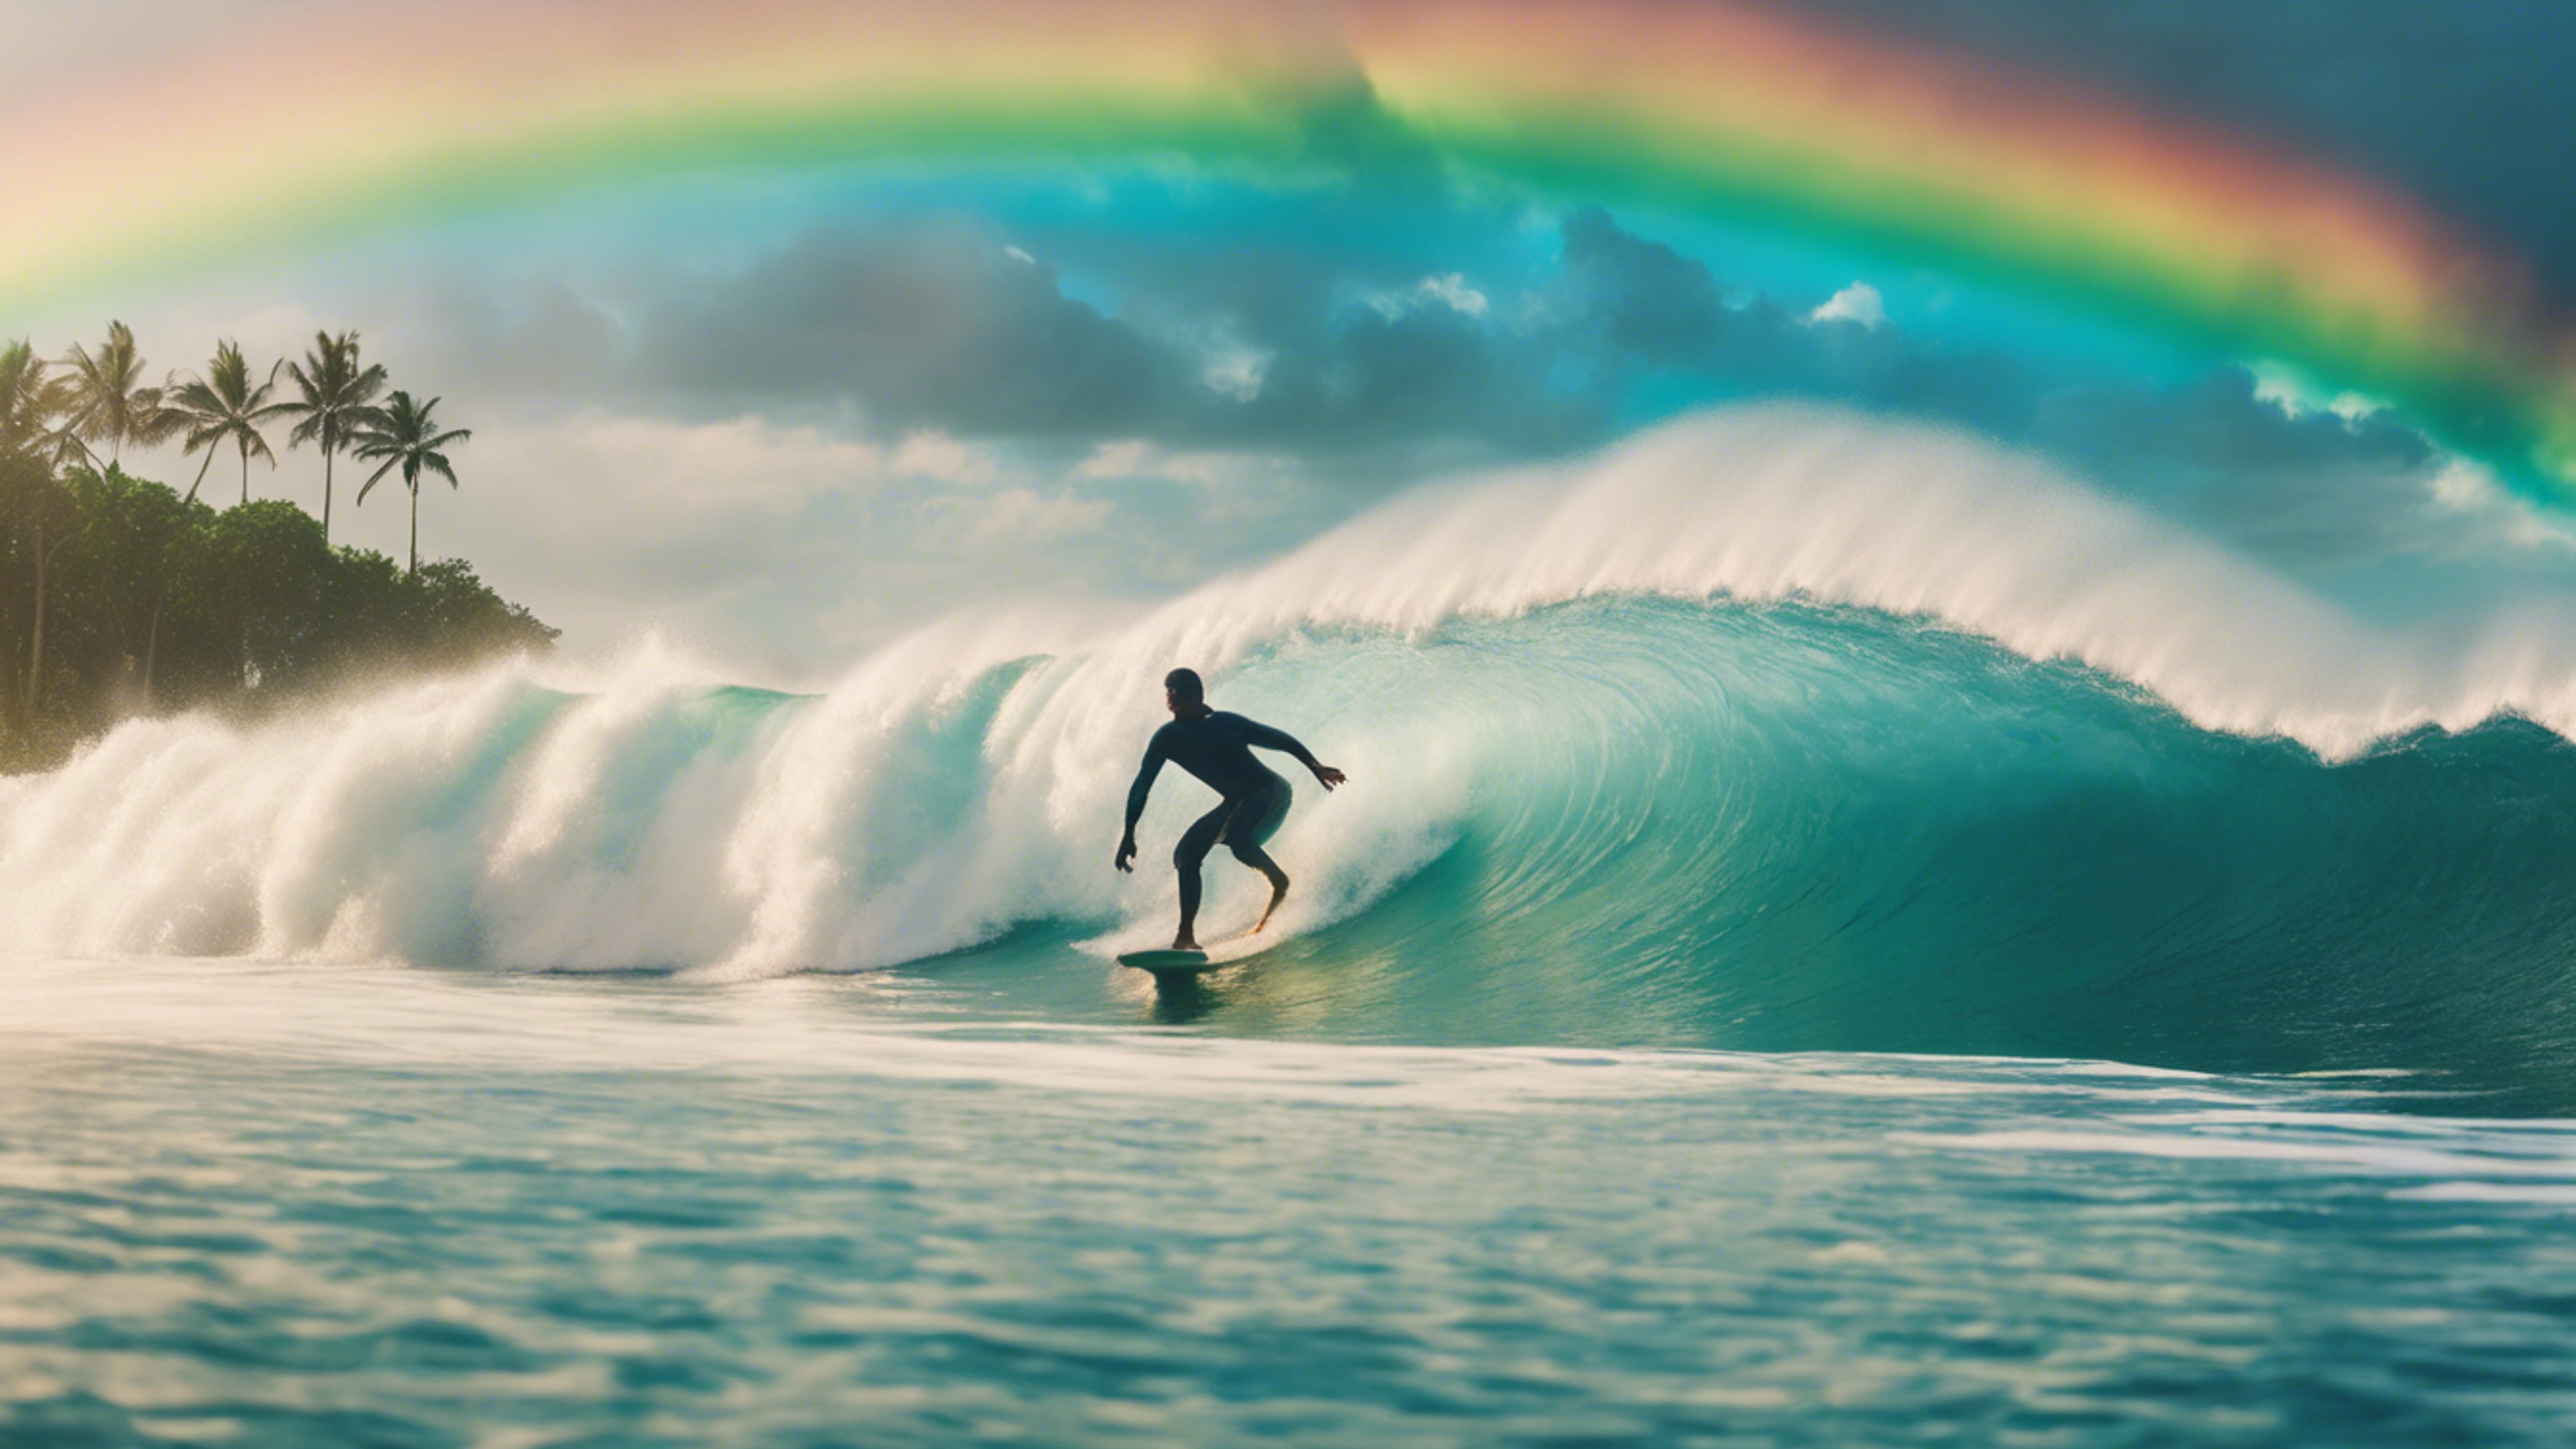 A spontaneous man surfing on a giant wave under a scintillating rainbow in a tropical ocean. Hình nền[41deec9b24da40d39c6d]